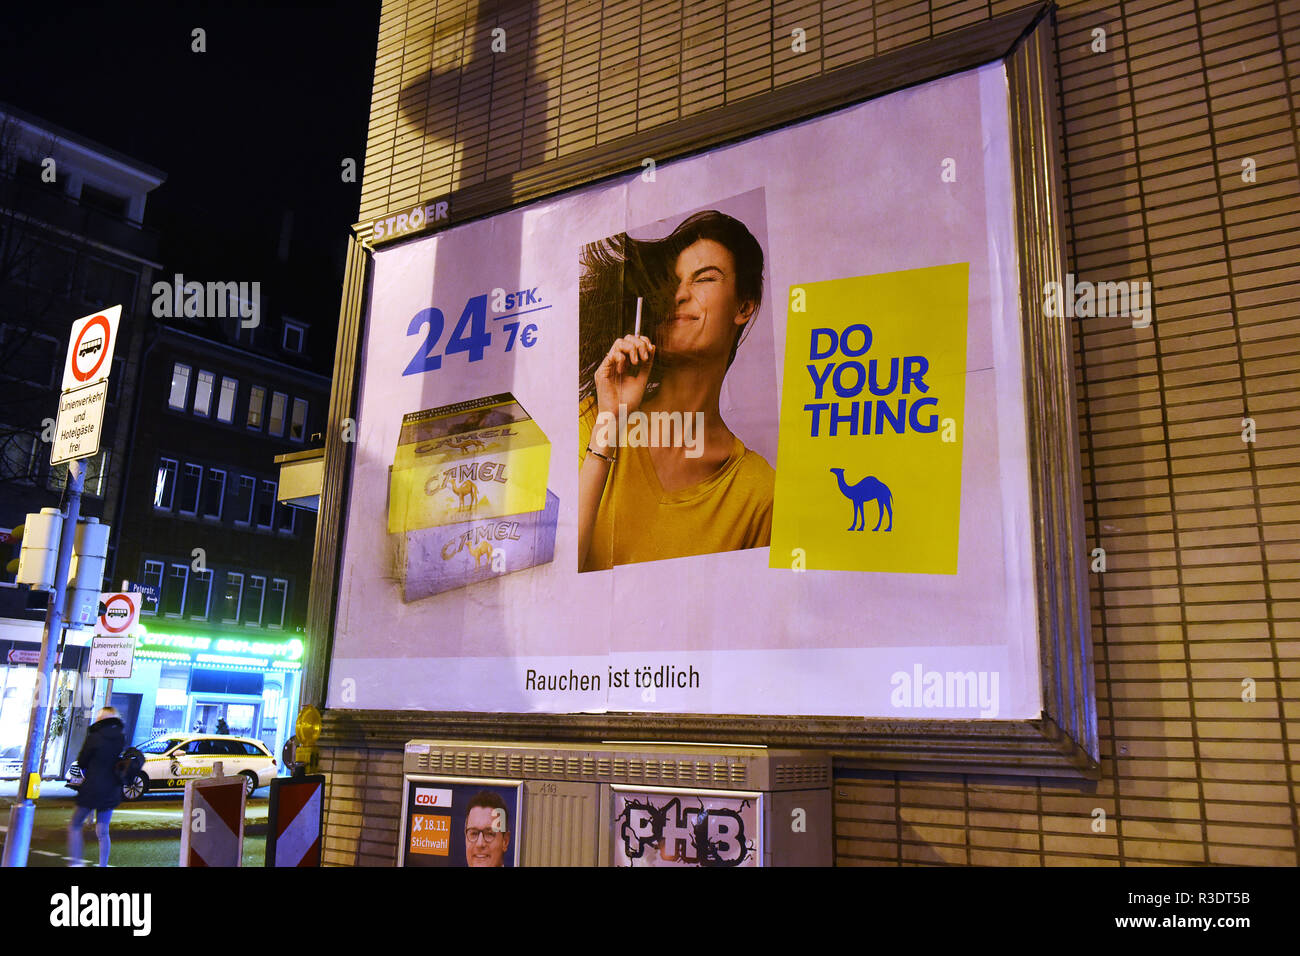 Cigarette advertising billboard in Aachen Germany Europe Stock Photo